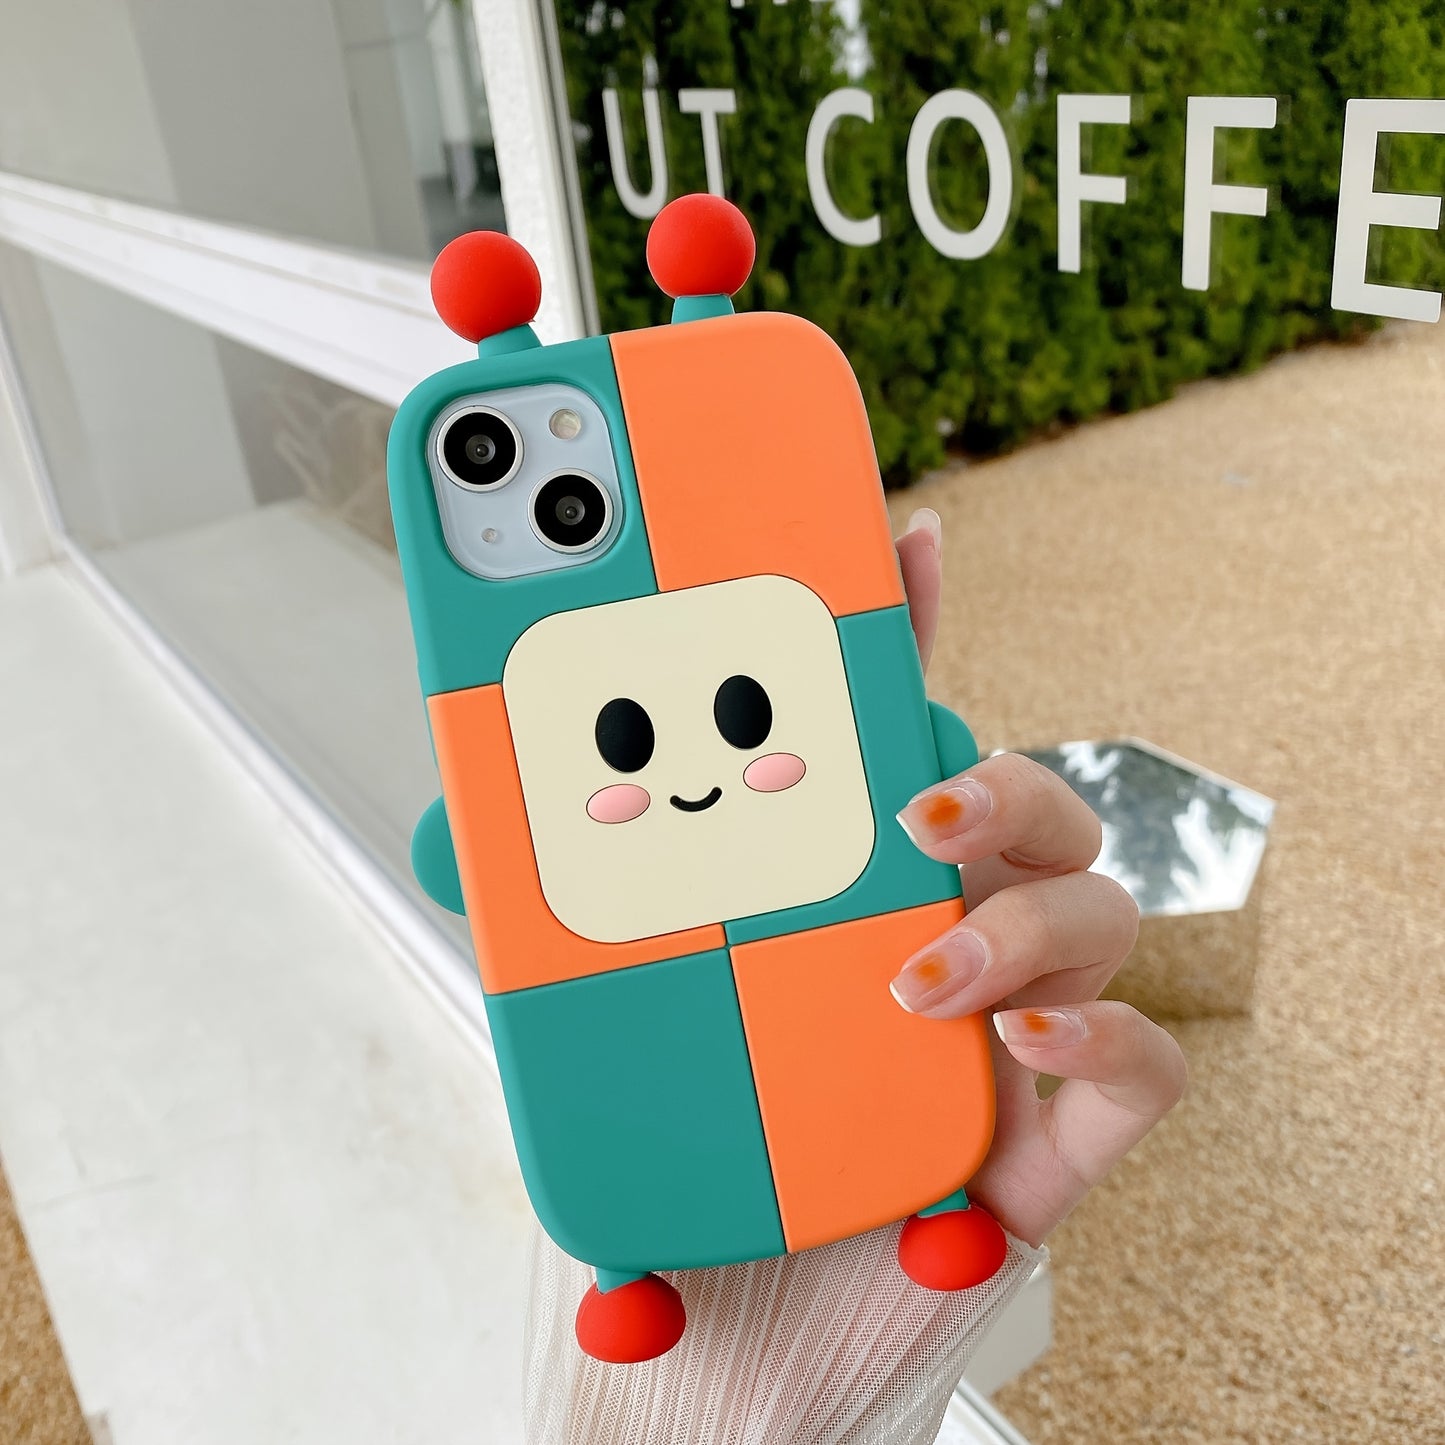 Green Orange Cartoon Cute Robot Mobile Phone Case